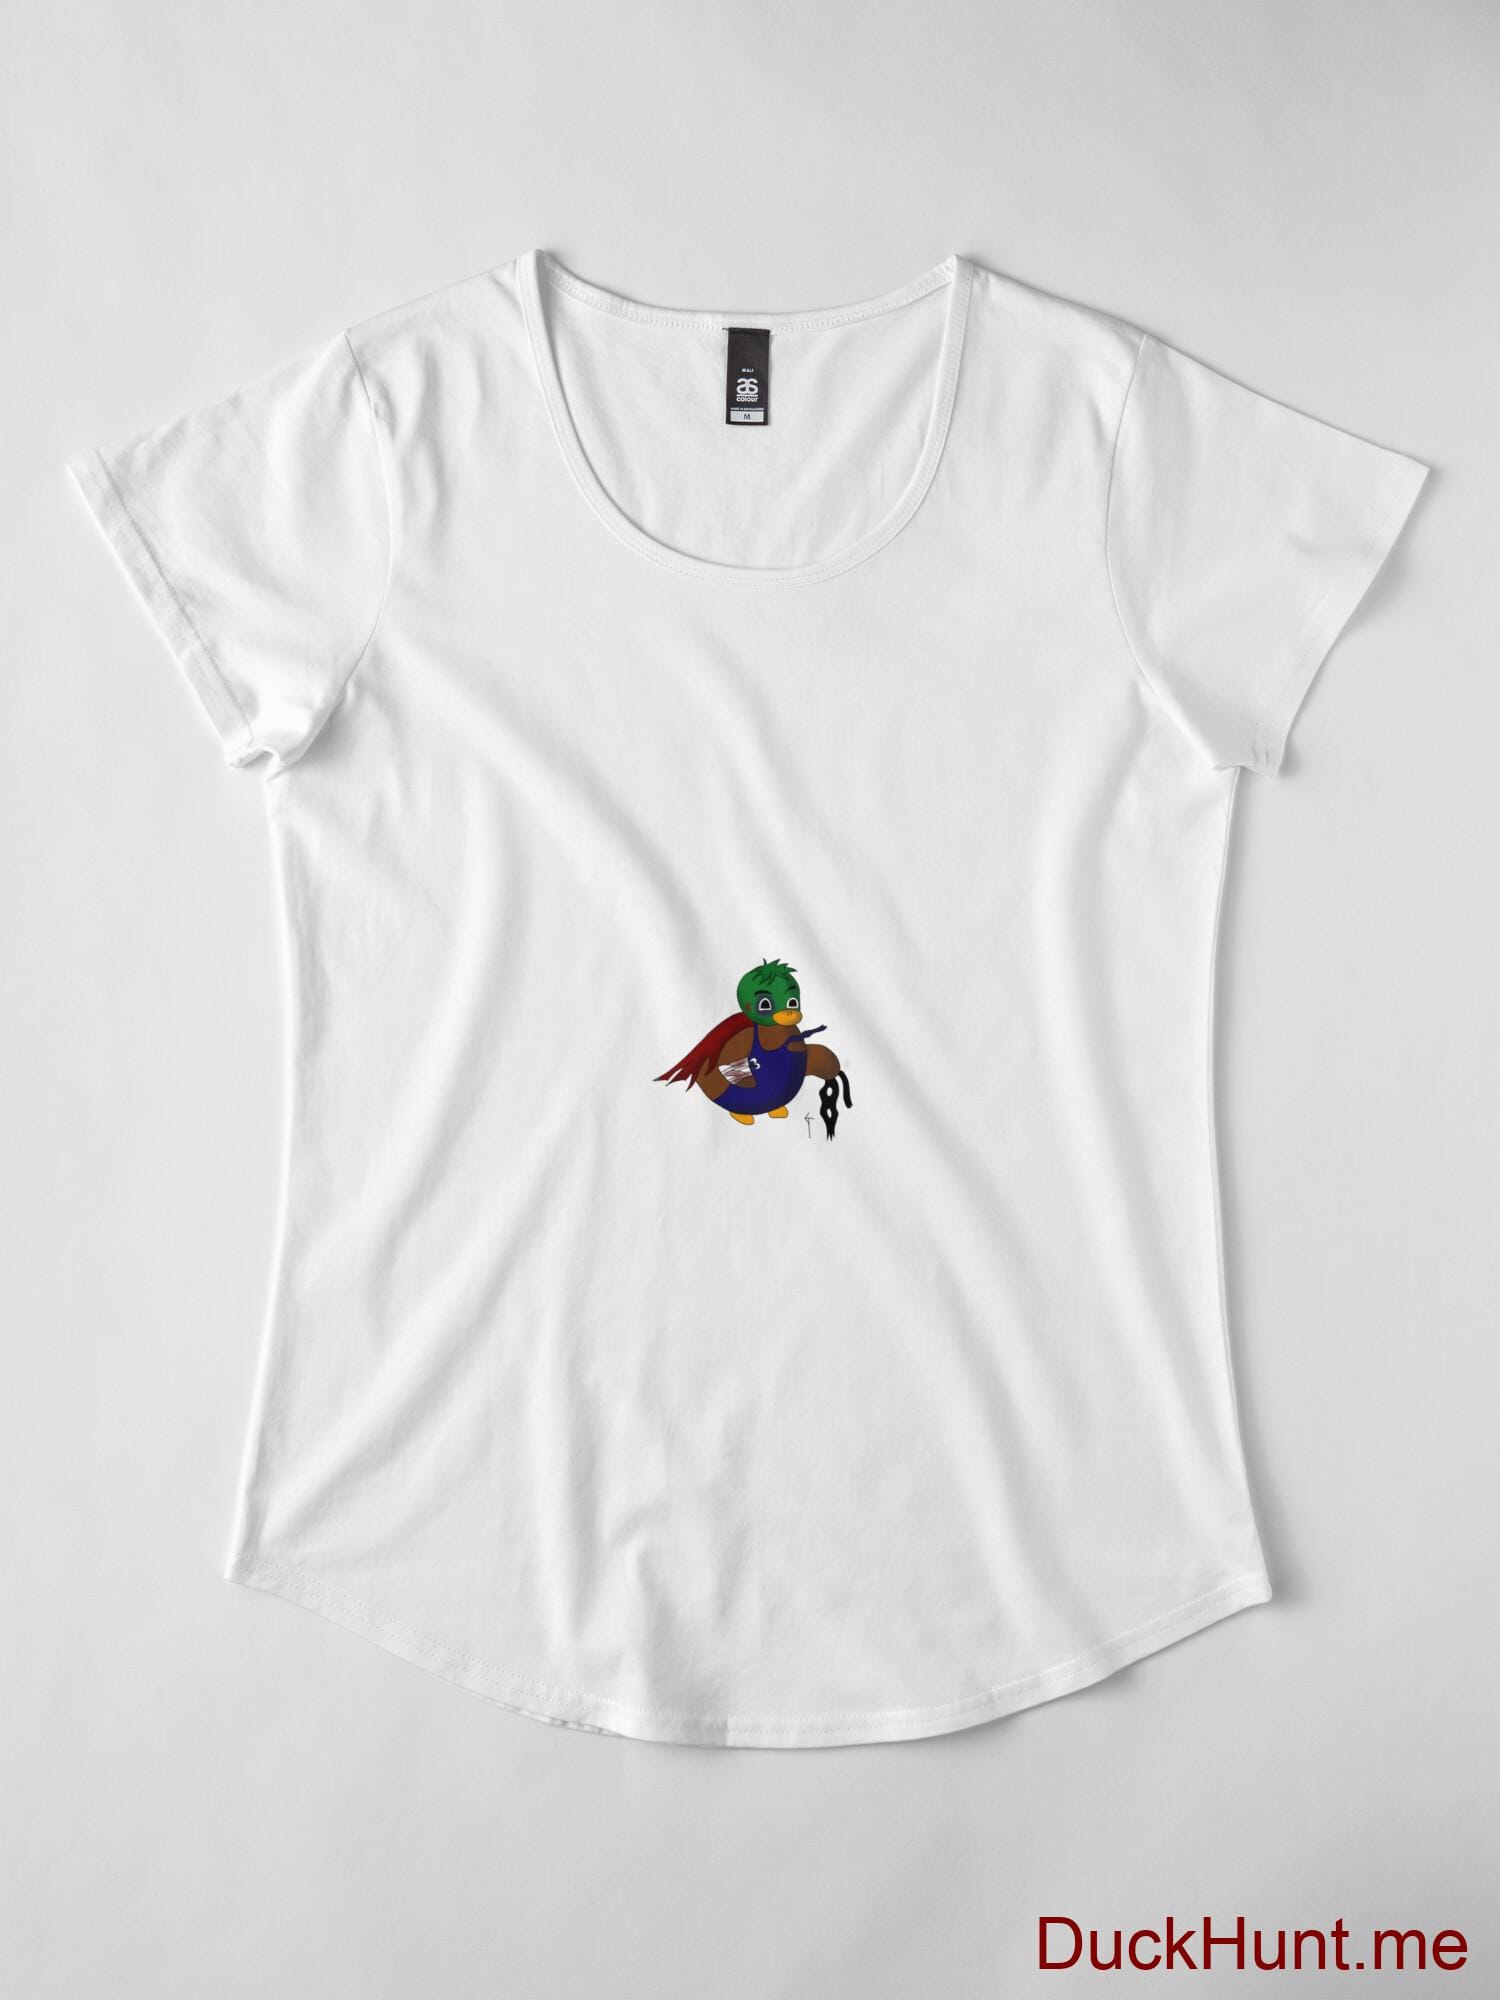 Dead DuckHunt Boss (smokeless) White Premium Scoop T-Shirt (Front printed) alternative image 3